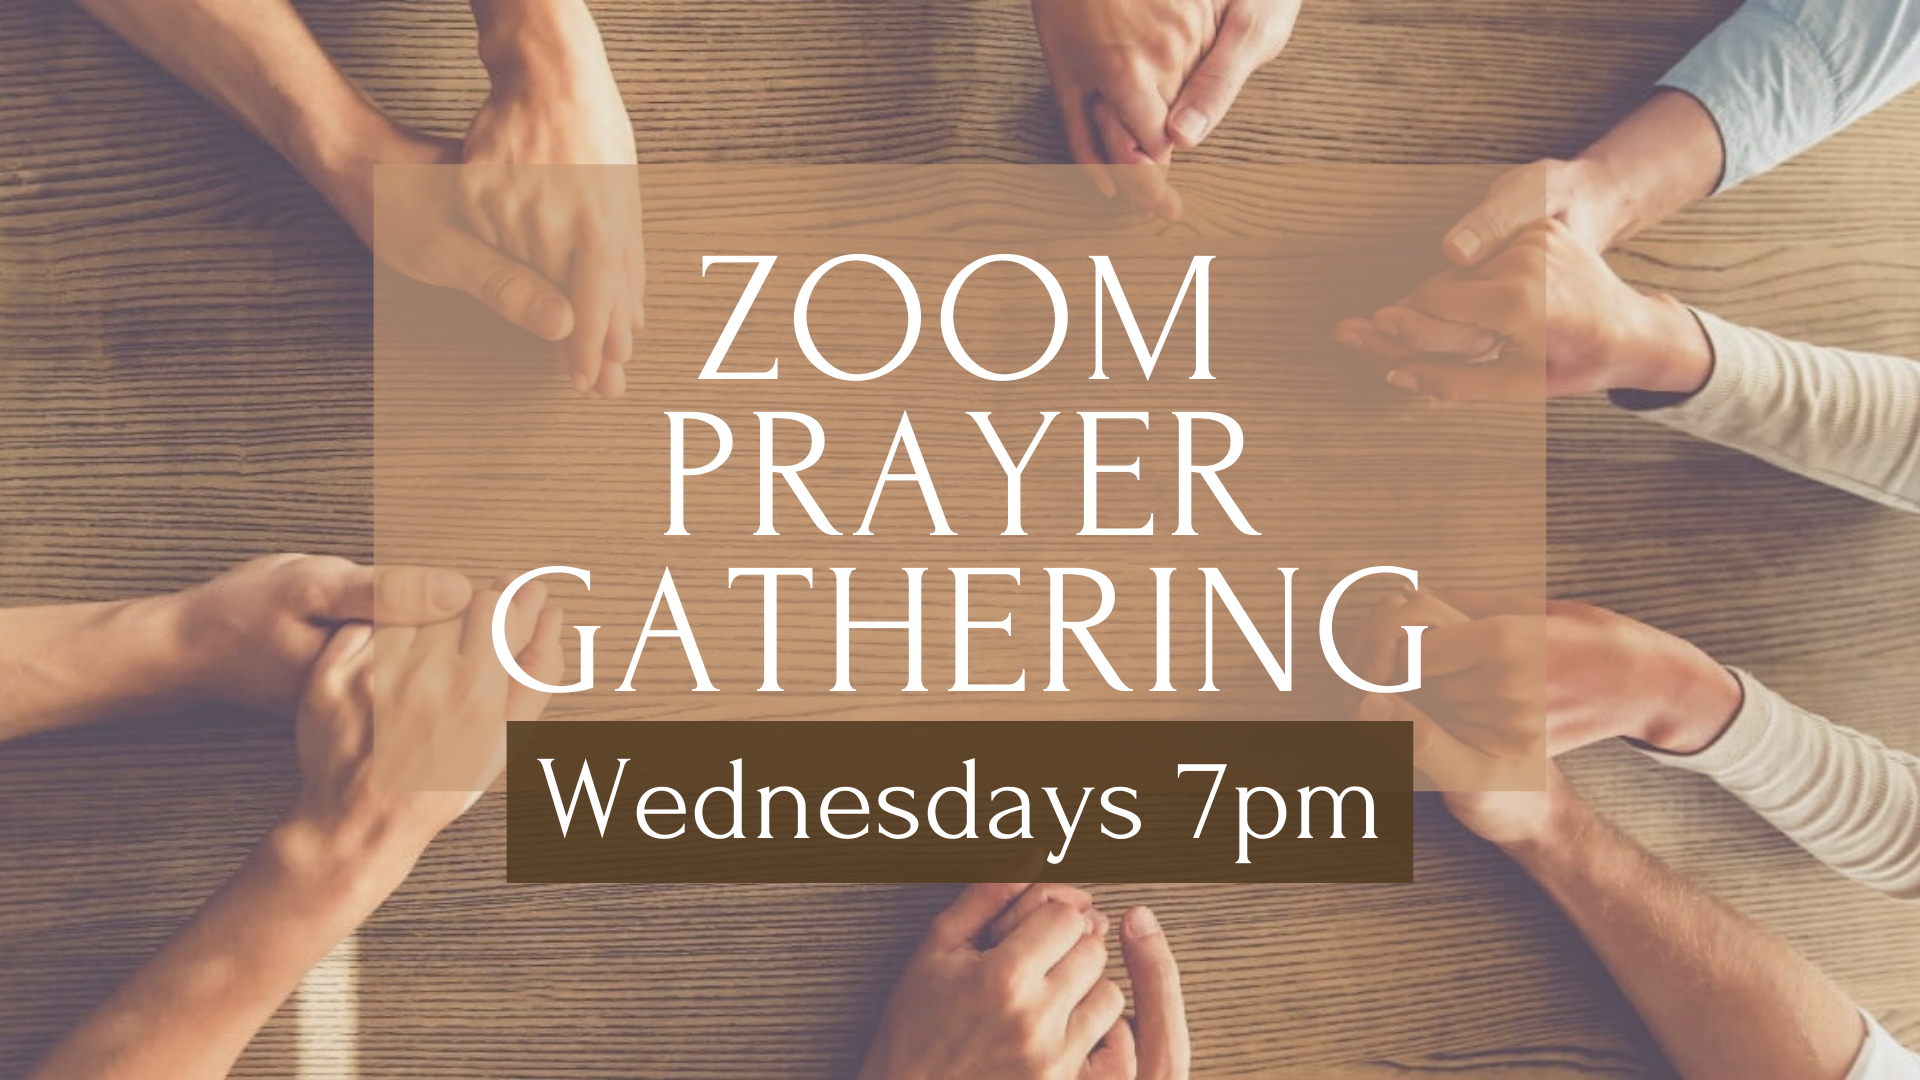 Wednesday Night Prayer Gathering @ Online, via Zoom link